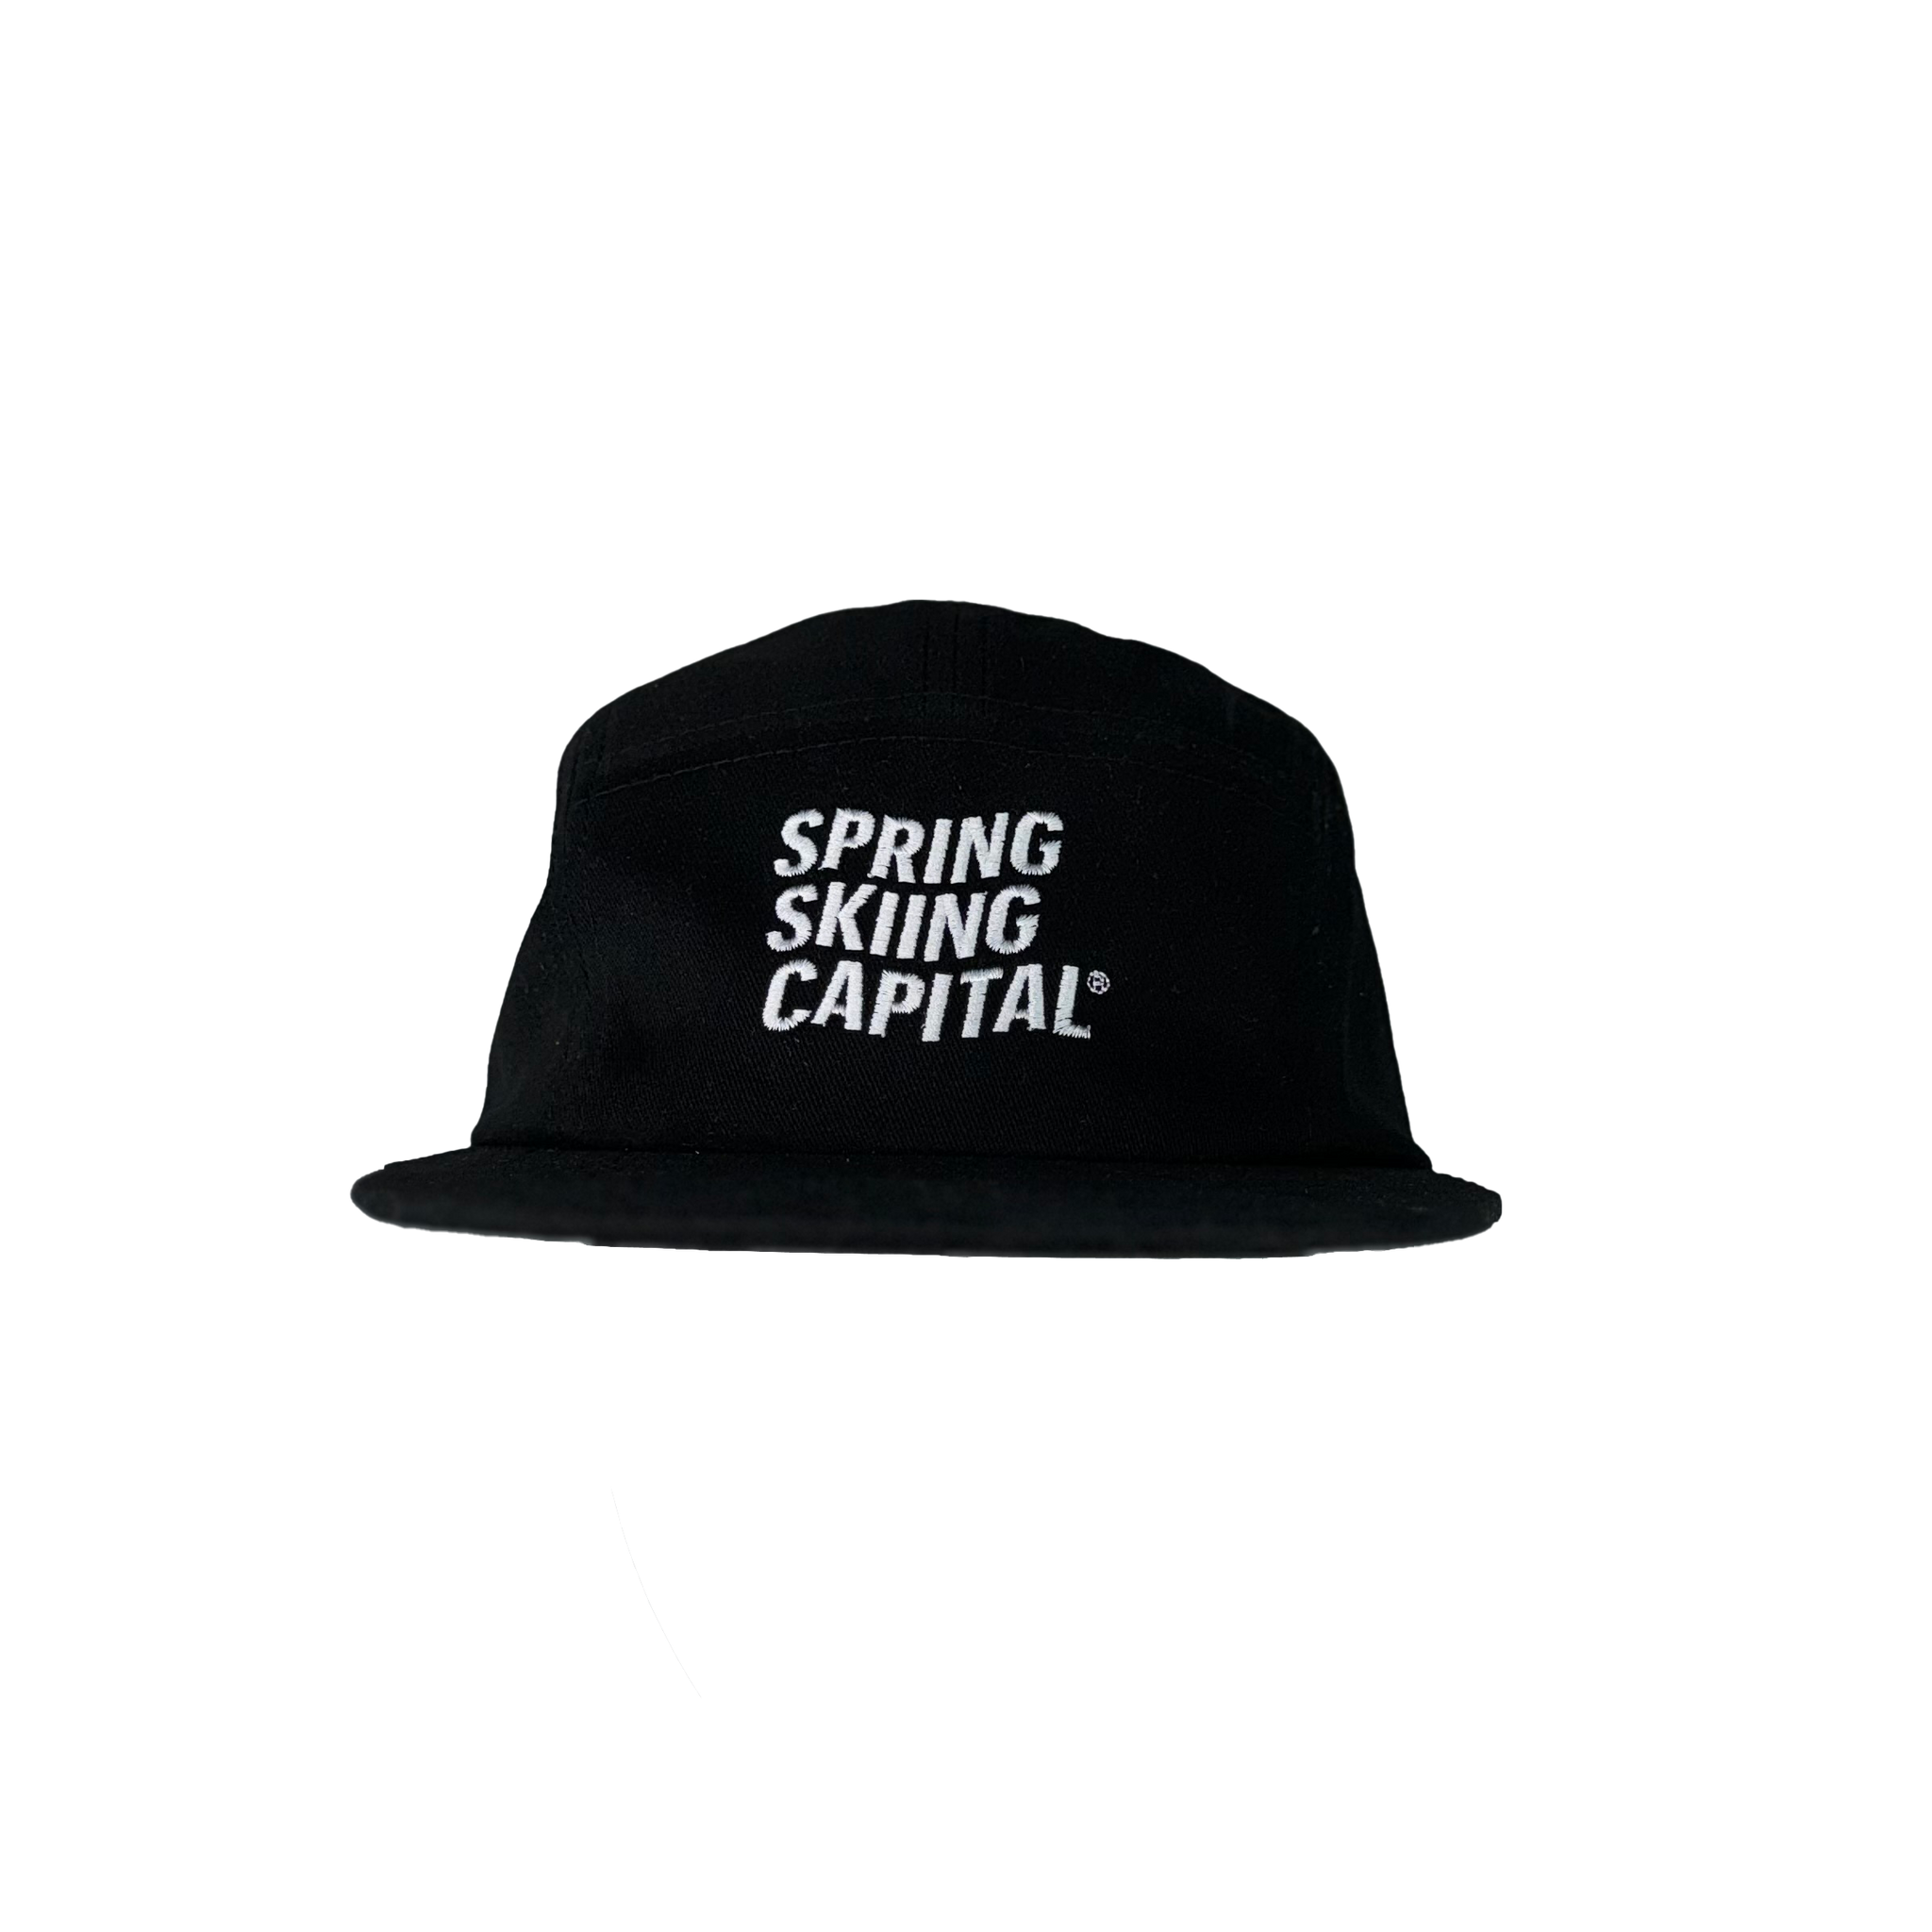 SPRING SKIING CAPITAL CAMPER HAT